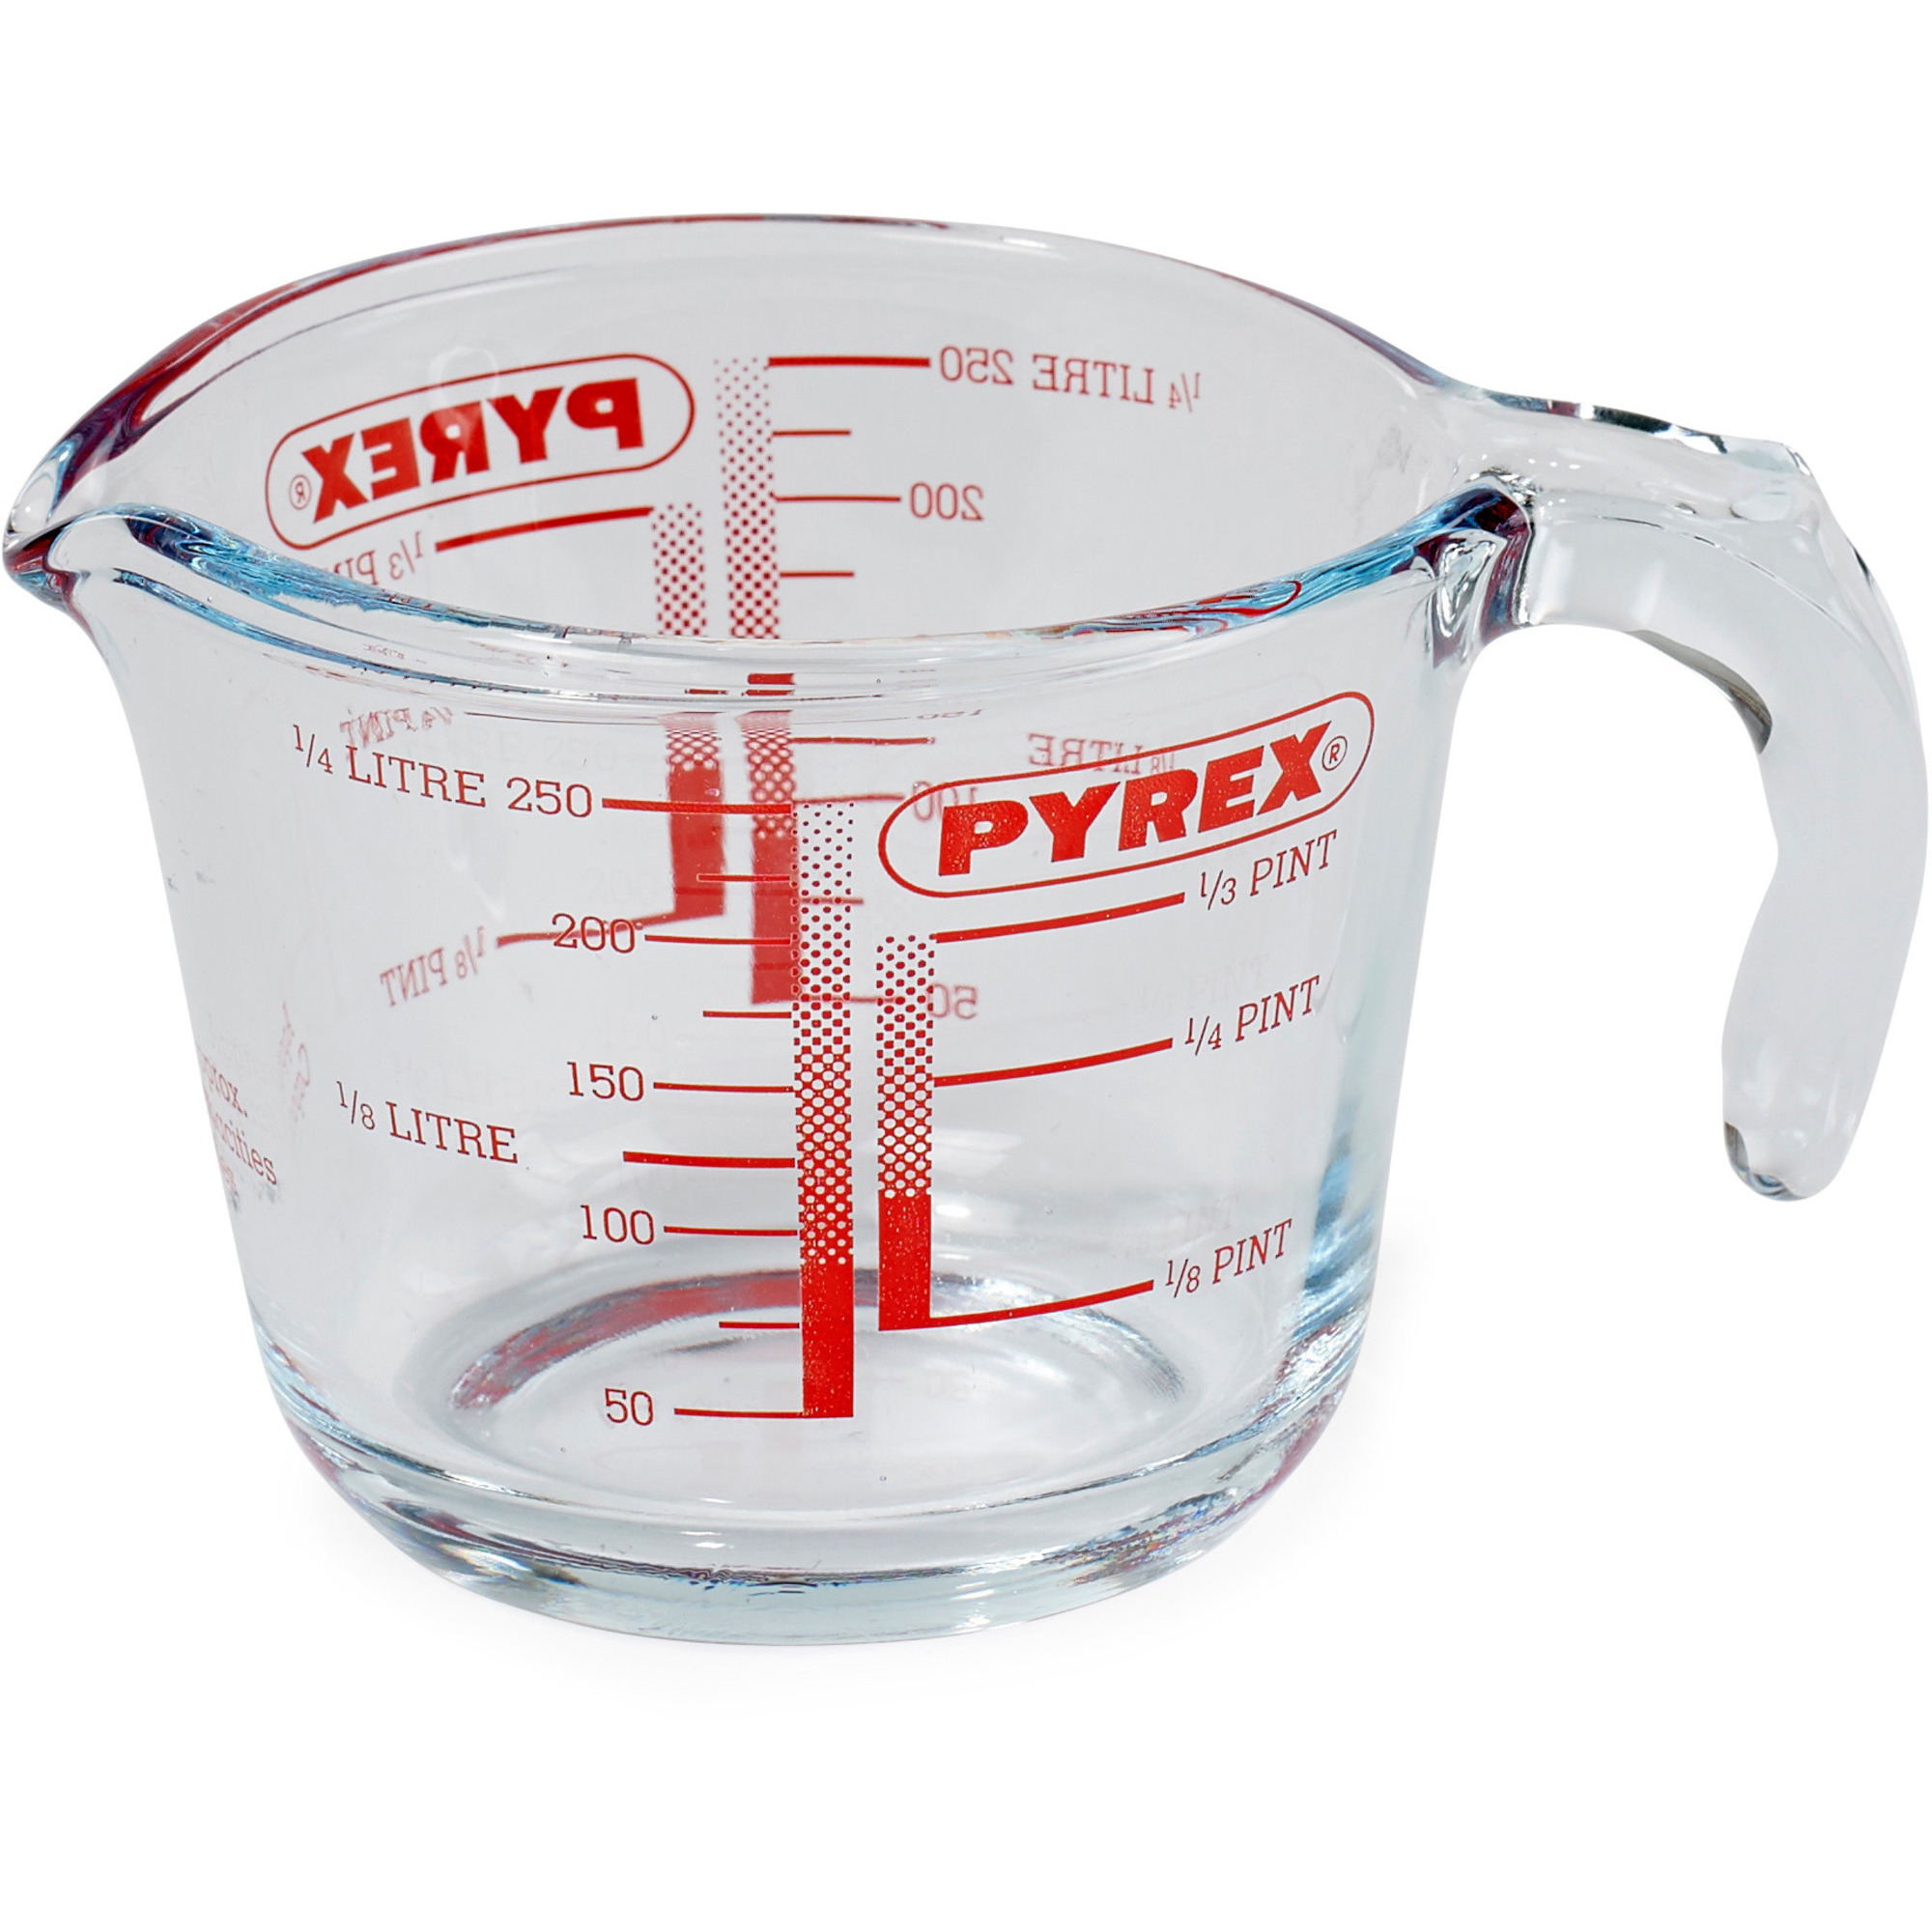 Pyrex Målebeger i glass 0,25 liter Målekanne